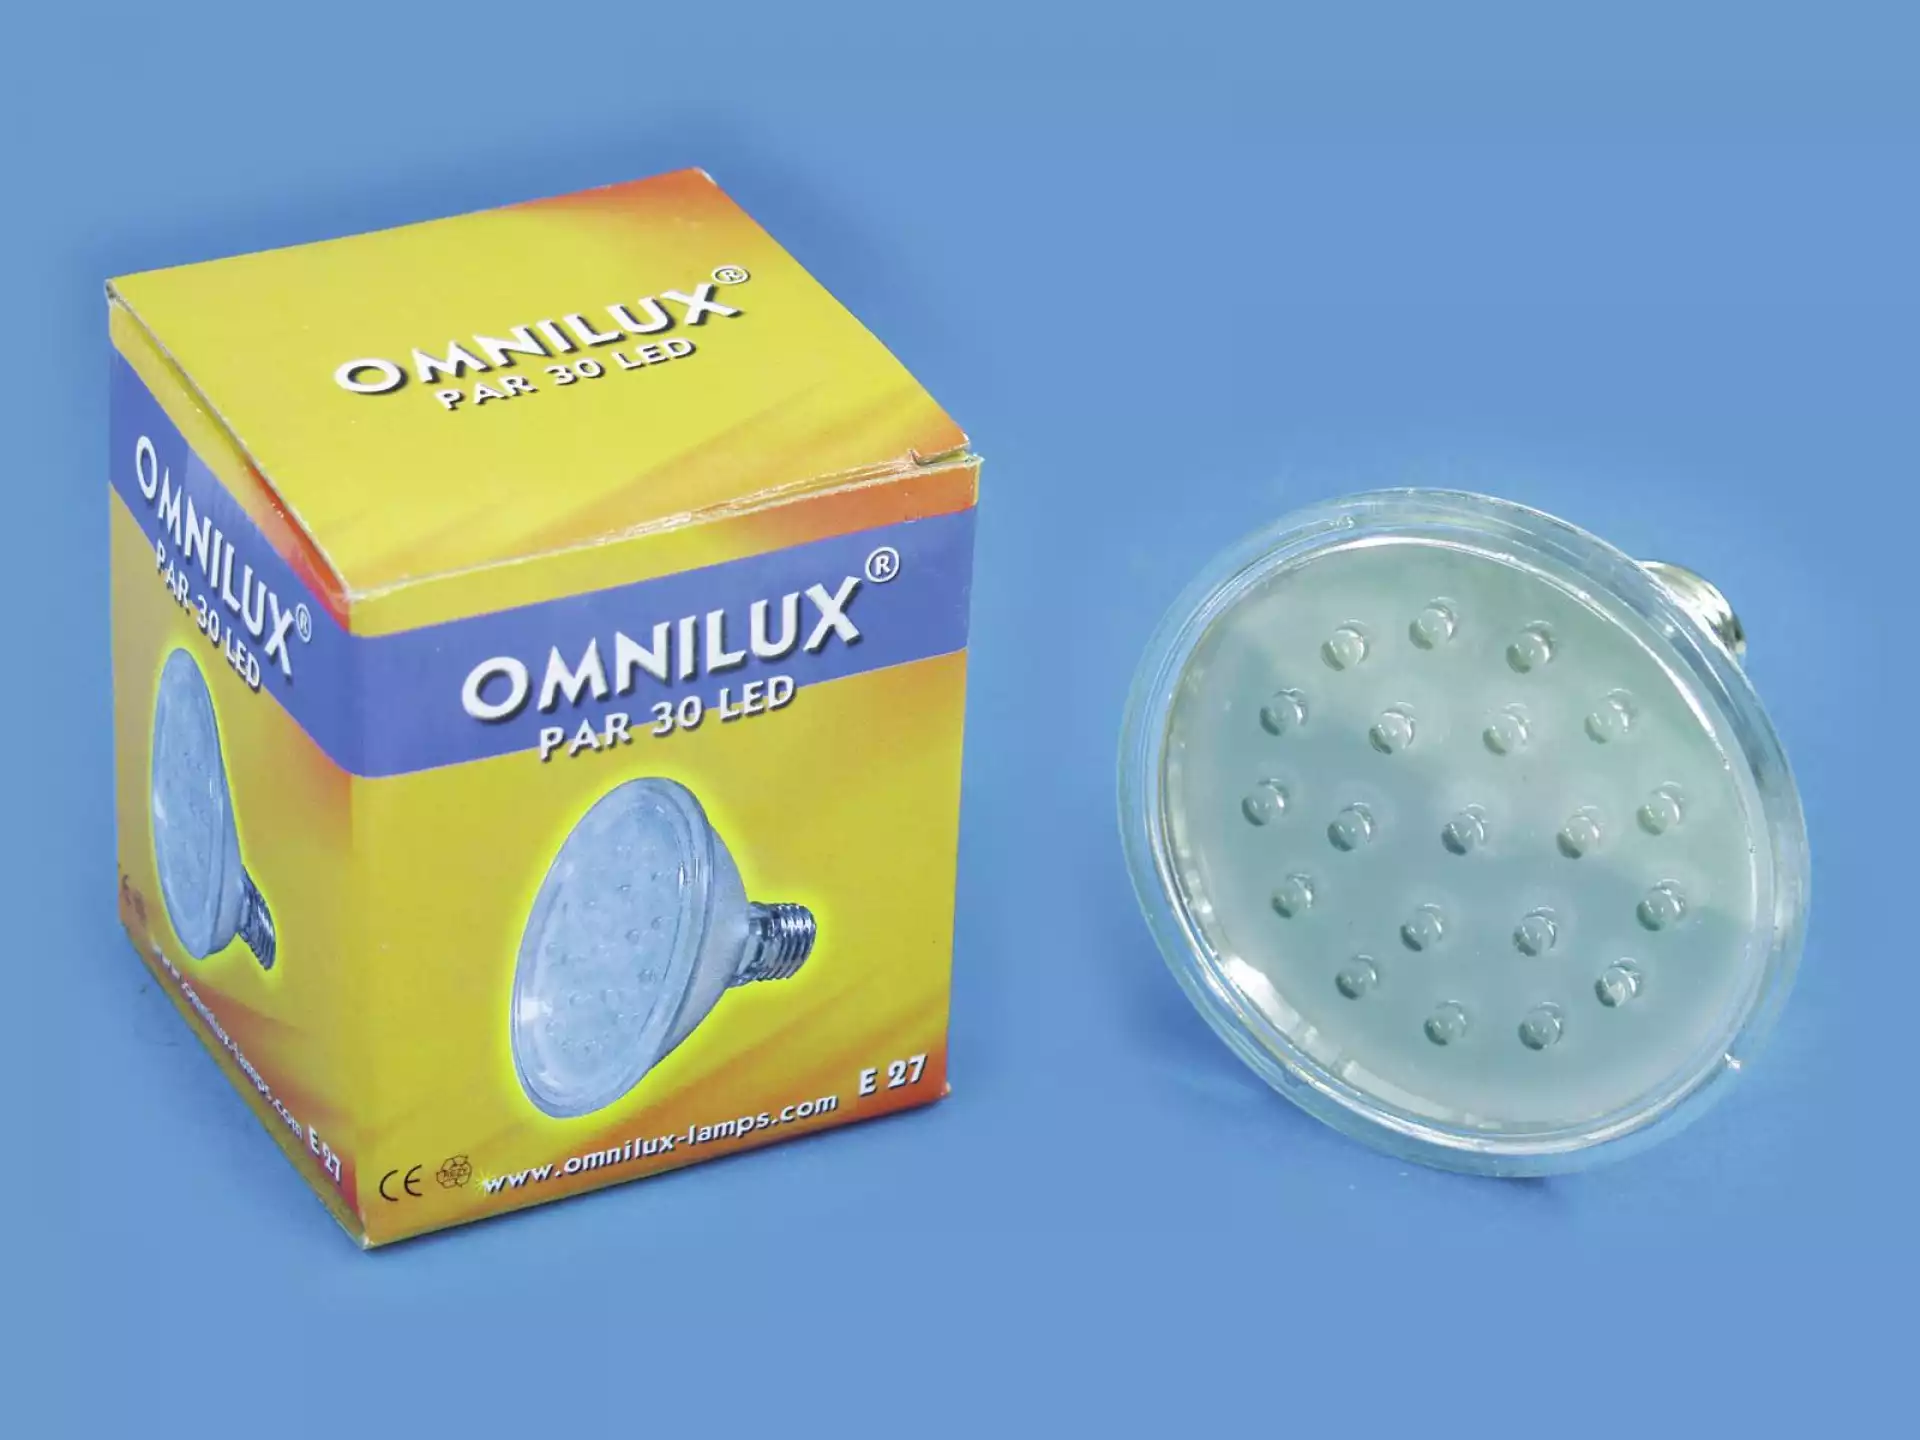 OMNILUX PAR 30 18 LED WHITE